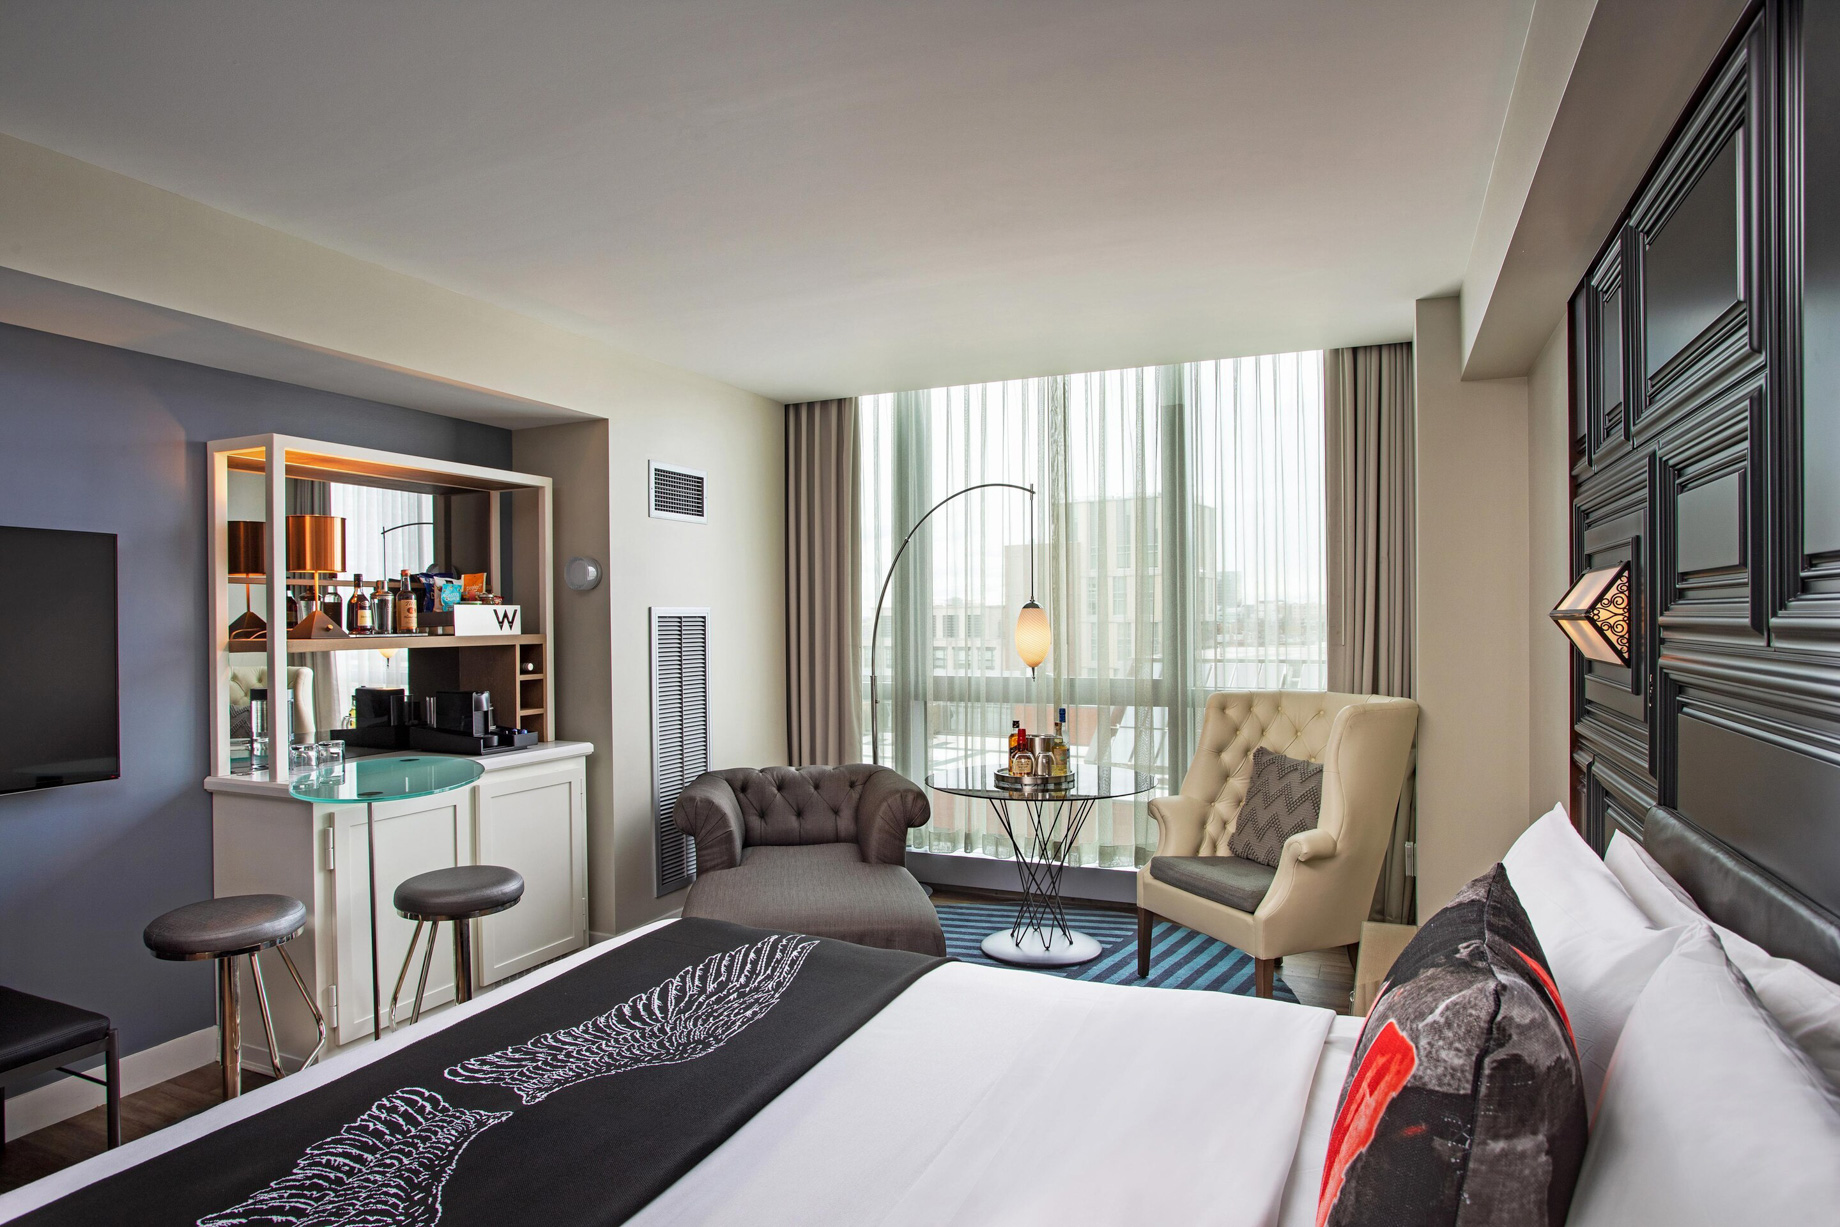 W Boston Hotel – Boston, MA, USA – Spectacular Guest Room